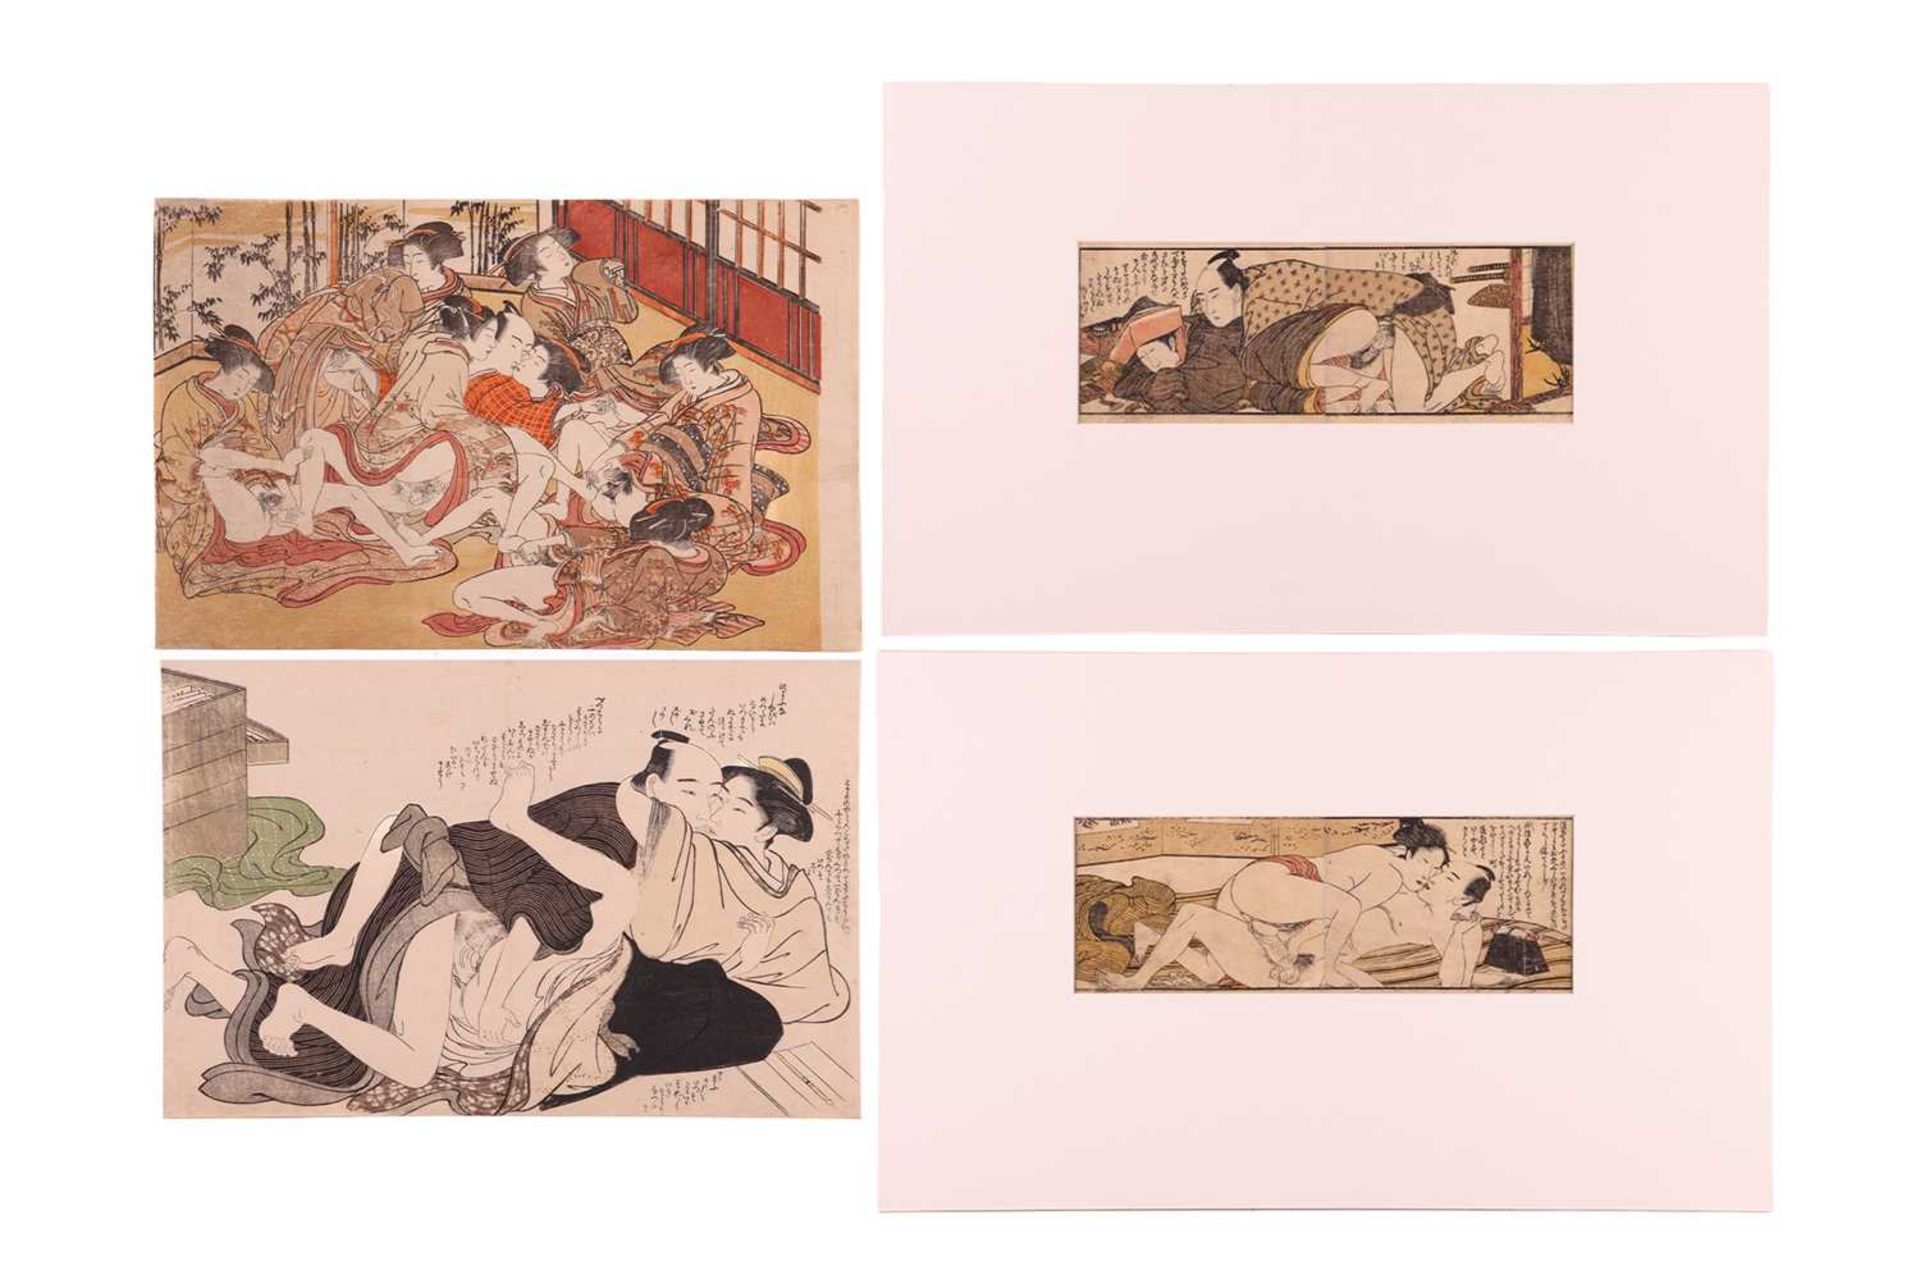 A small collection of Japanese Edo period erotic woodblock prints (Shunga) including Shuncho, Katsuk